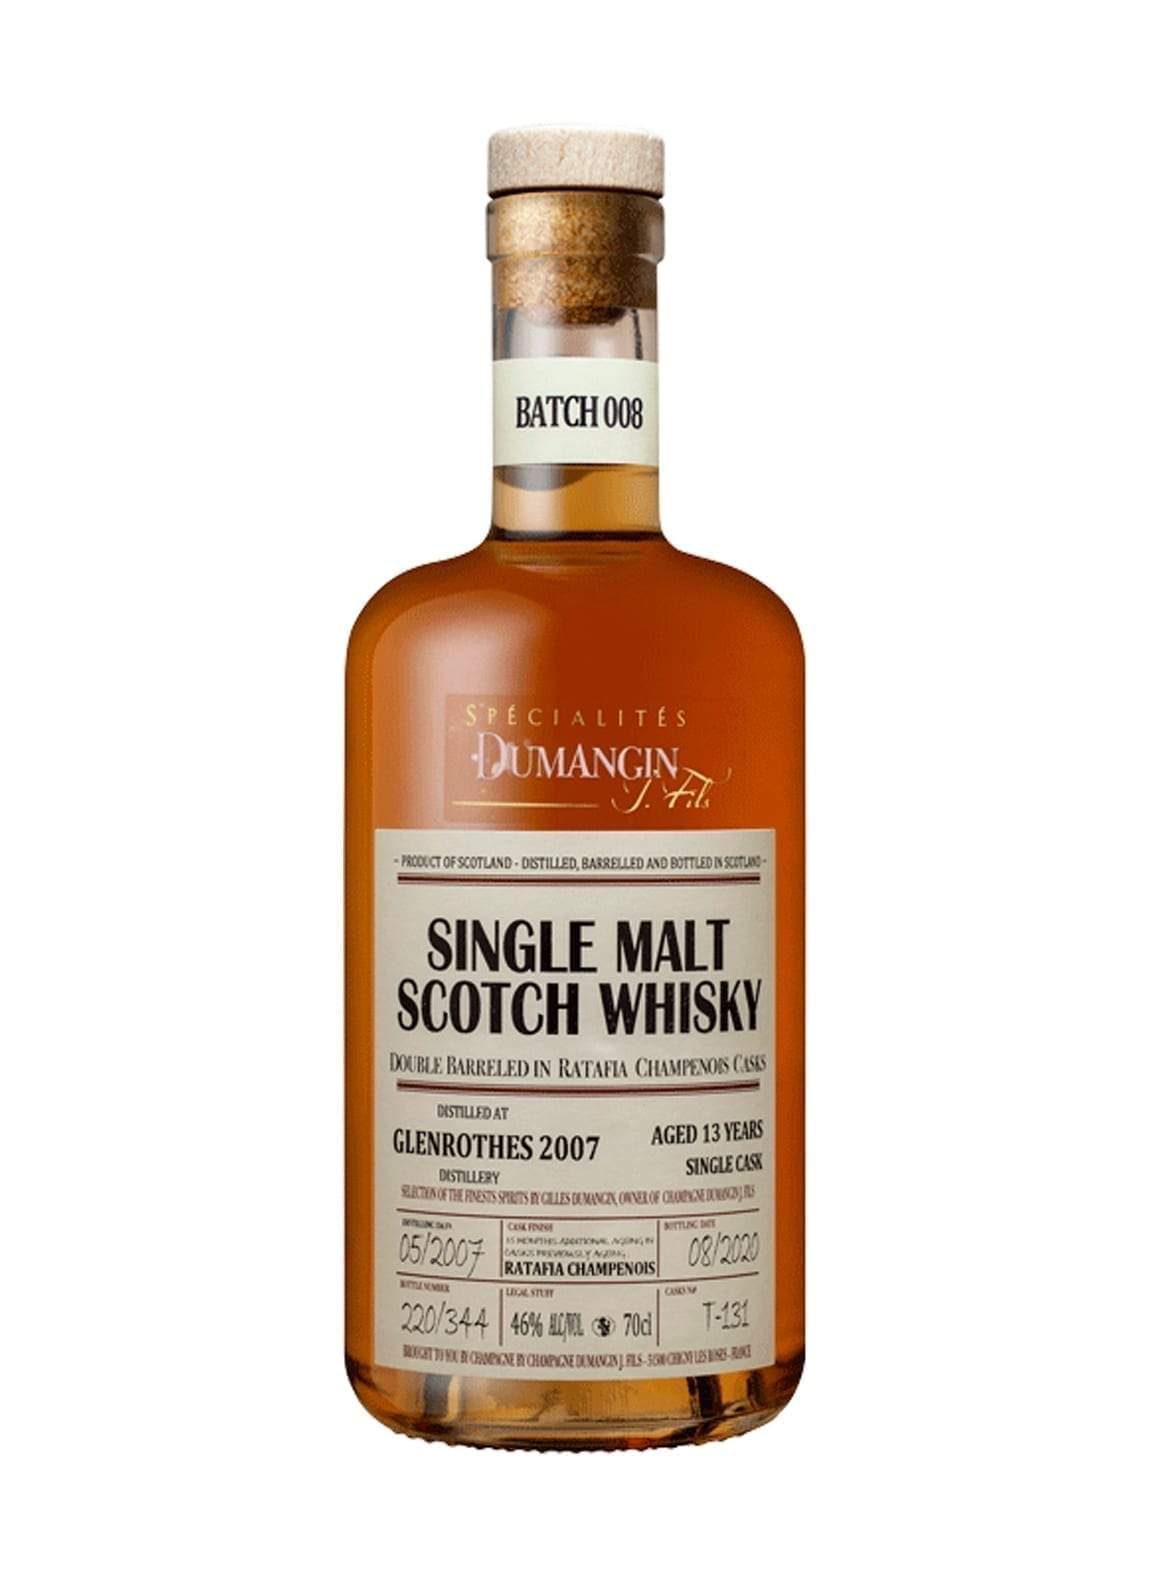 Dumangin Single Malt Scotch Whisky Glenrothes 2007 Batch 008 46% 700ml | Whiskey | Shop online at Spirits of France